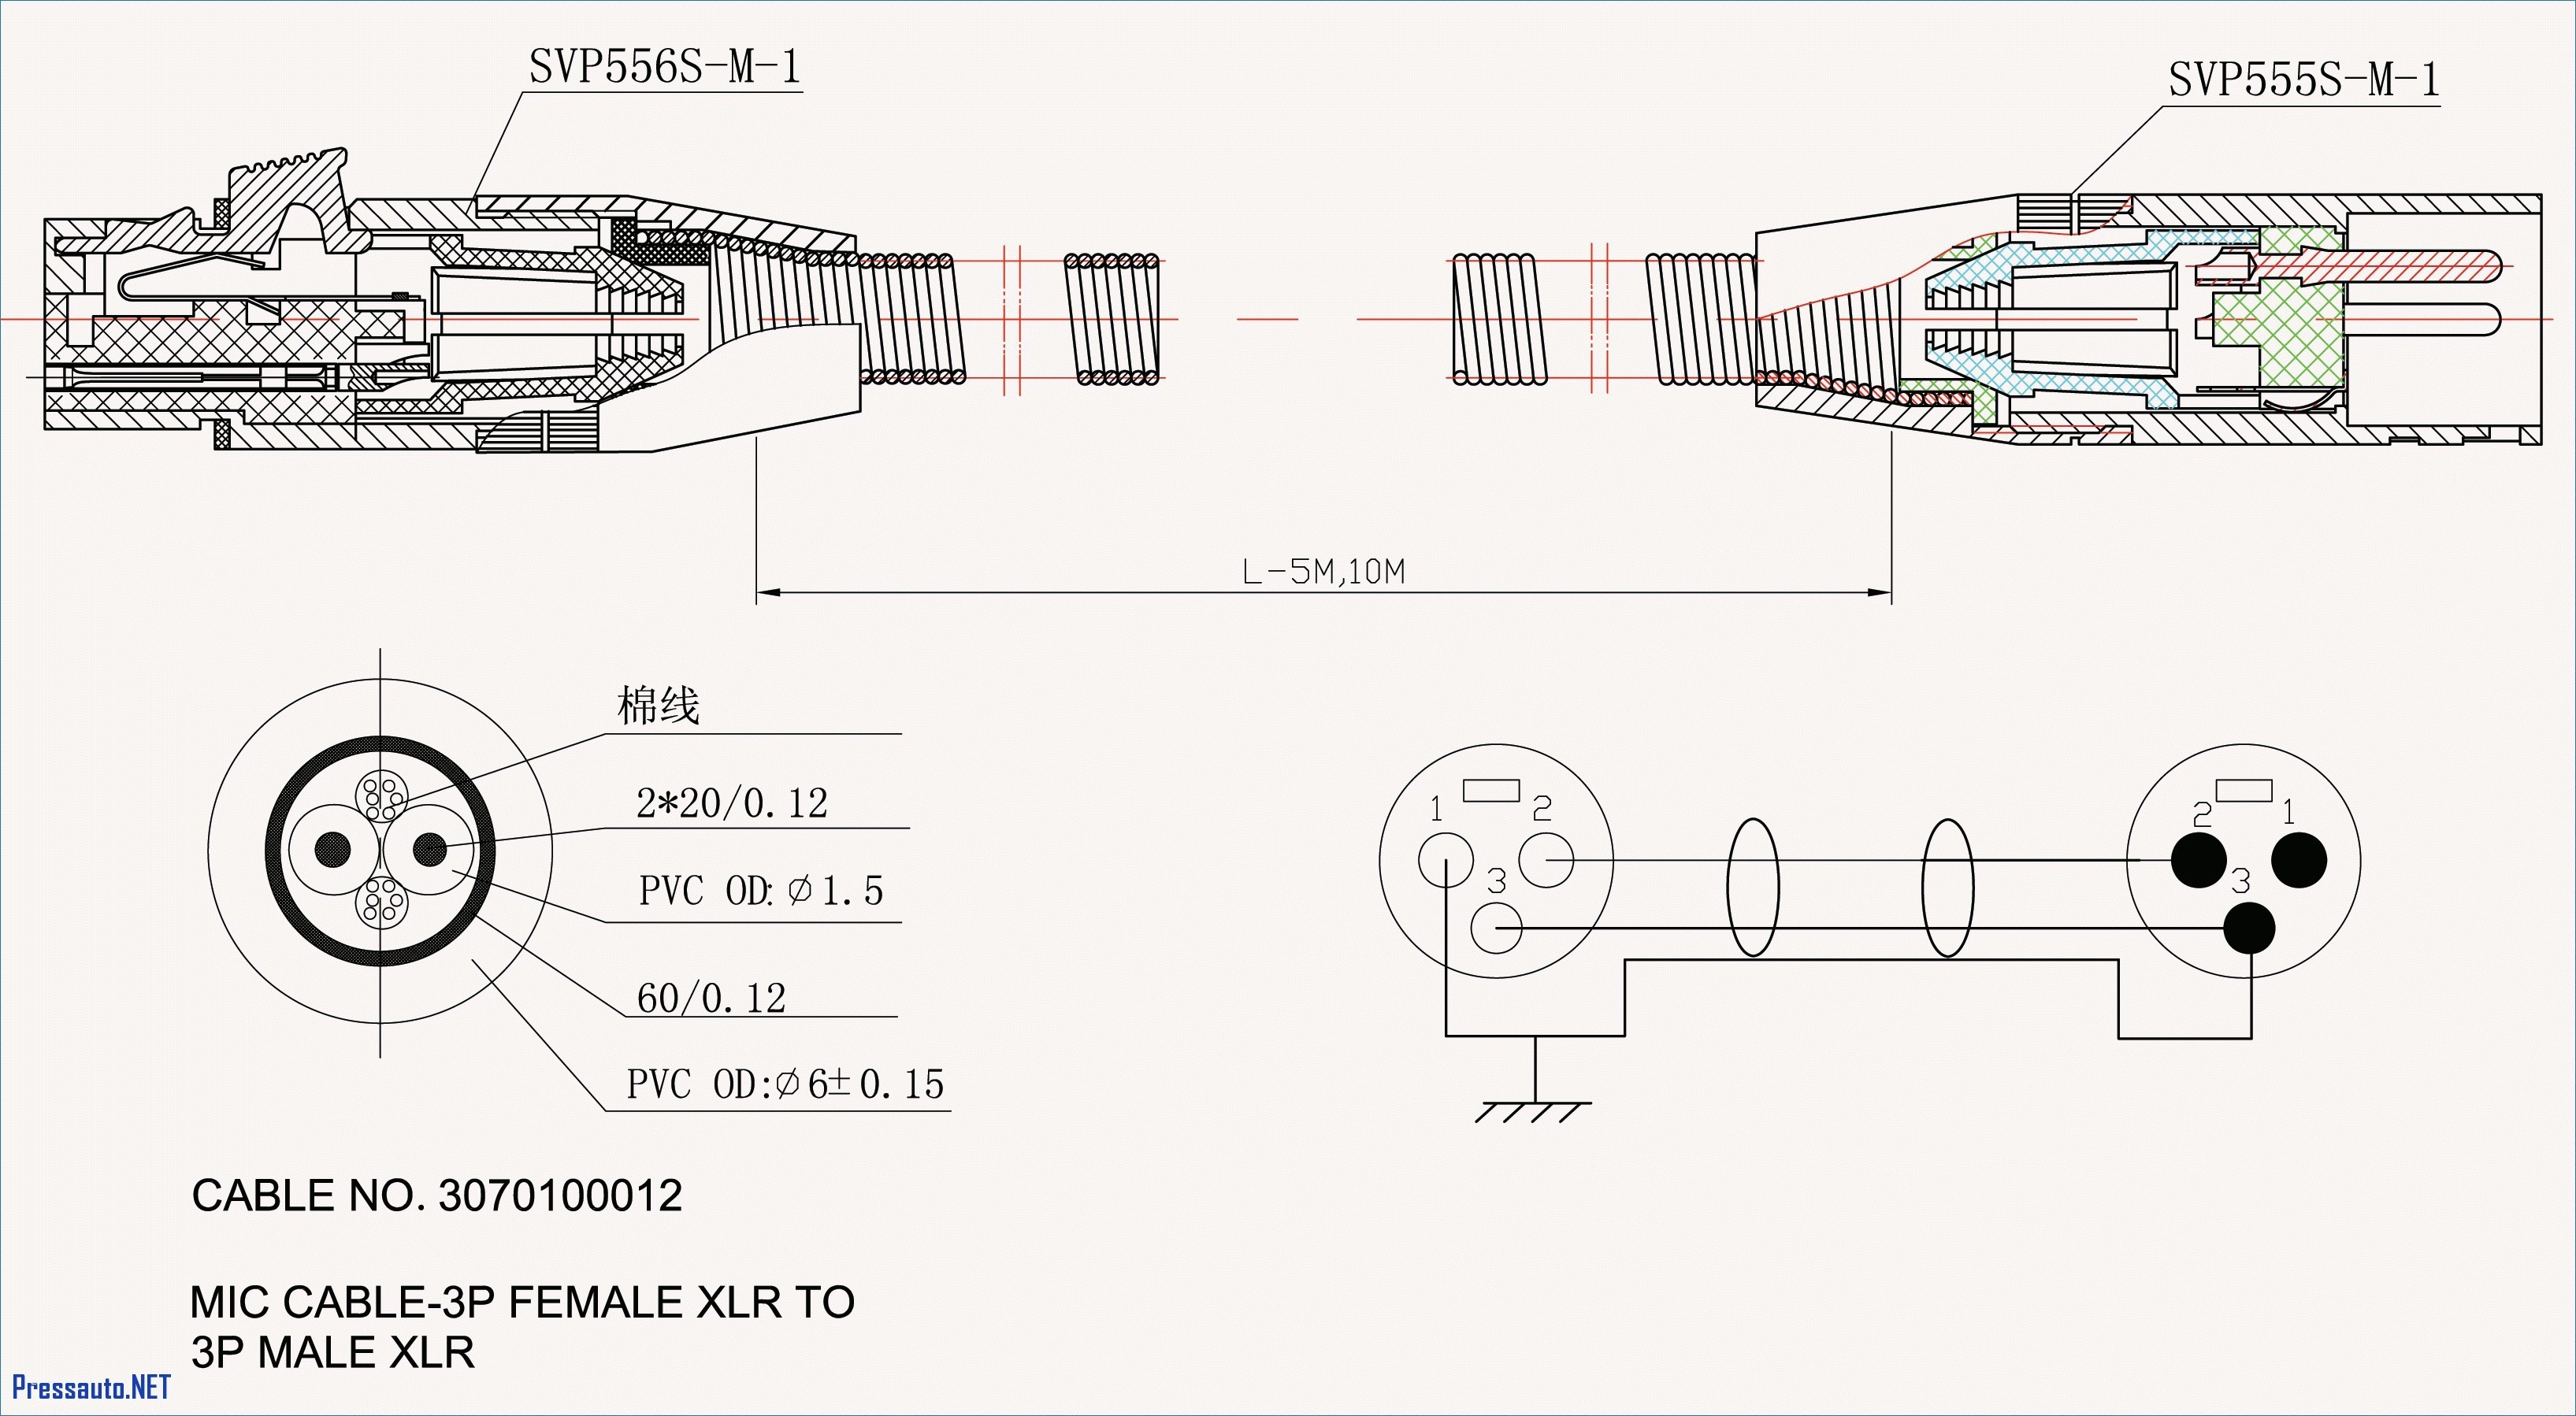 6 0 Powerstroke Engine Diagram ford 6 0 Powerstroke Engine Diagram Layout Wiring Diagrams • Of 6 0 Powerstroke Engine Diagram